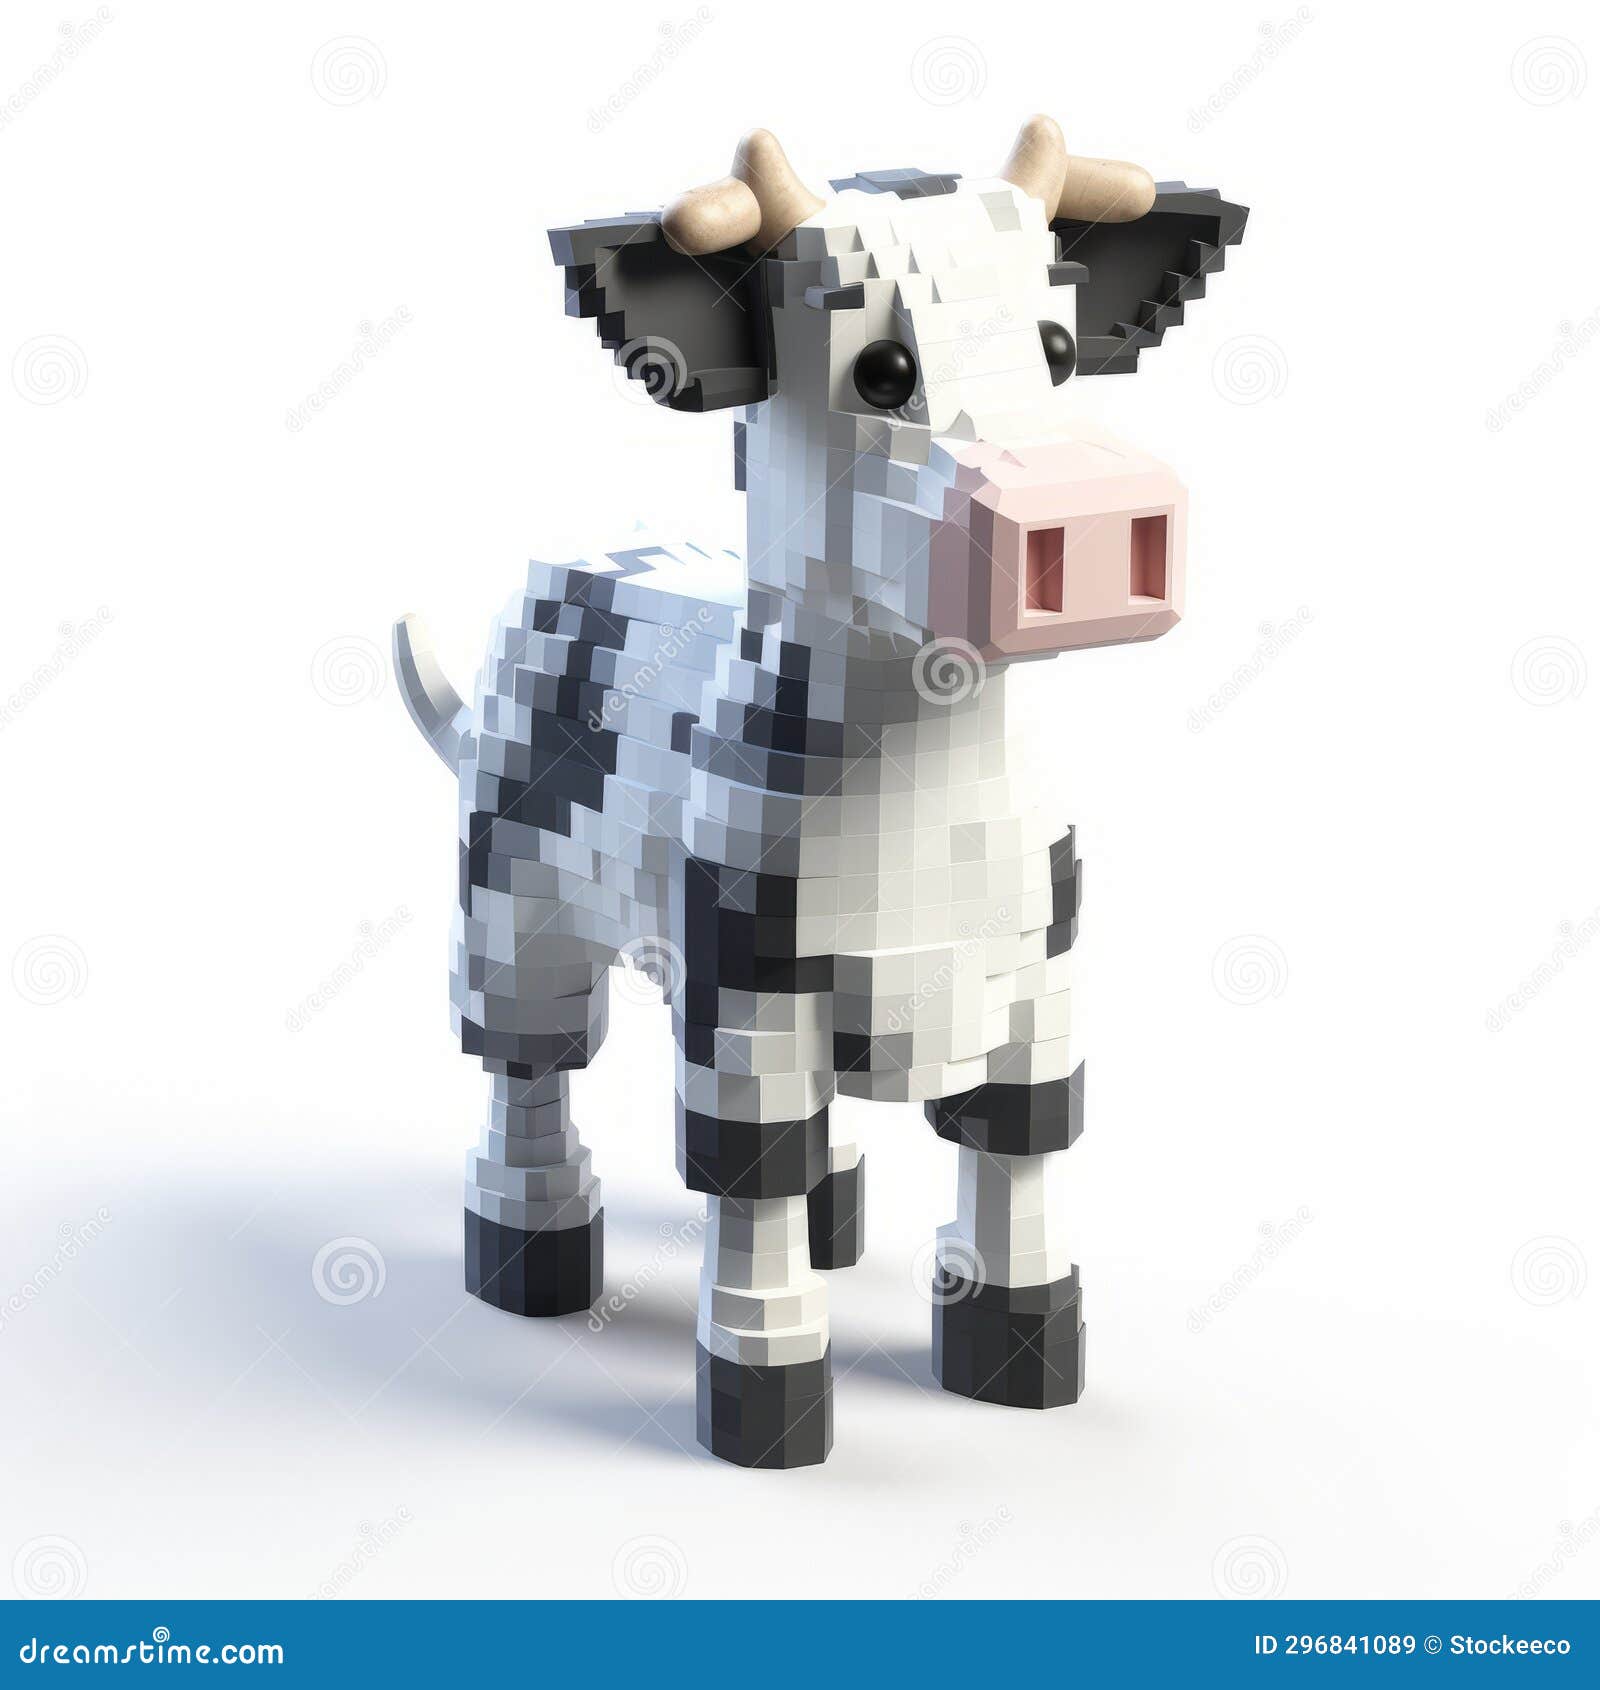 delicate 8k 3d pixel cow: eye-catching villagecore cartoon